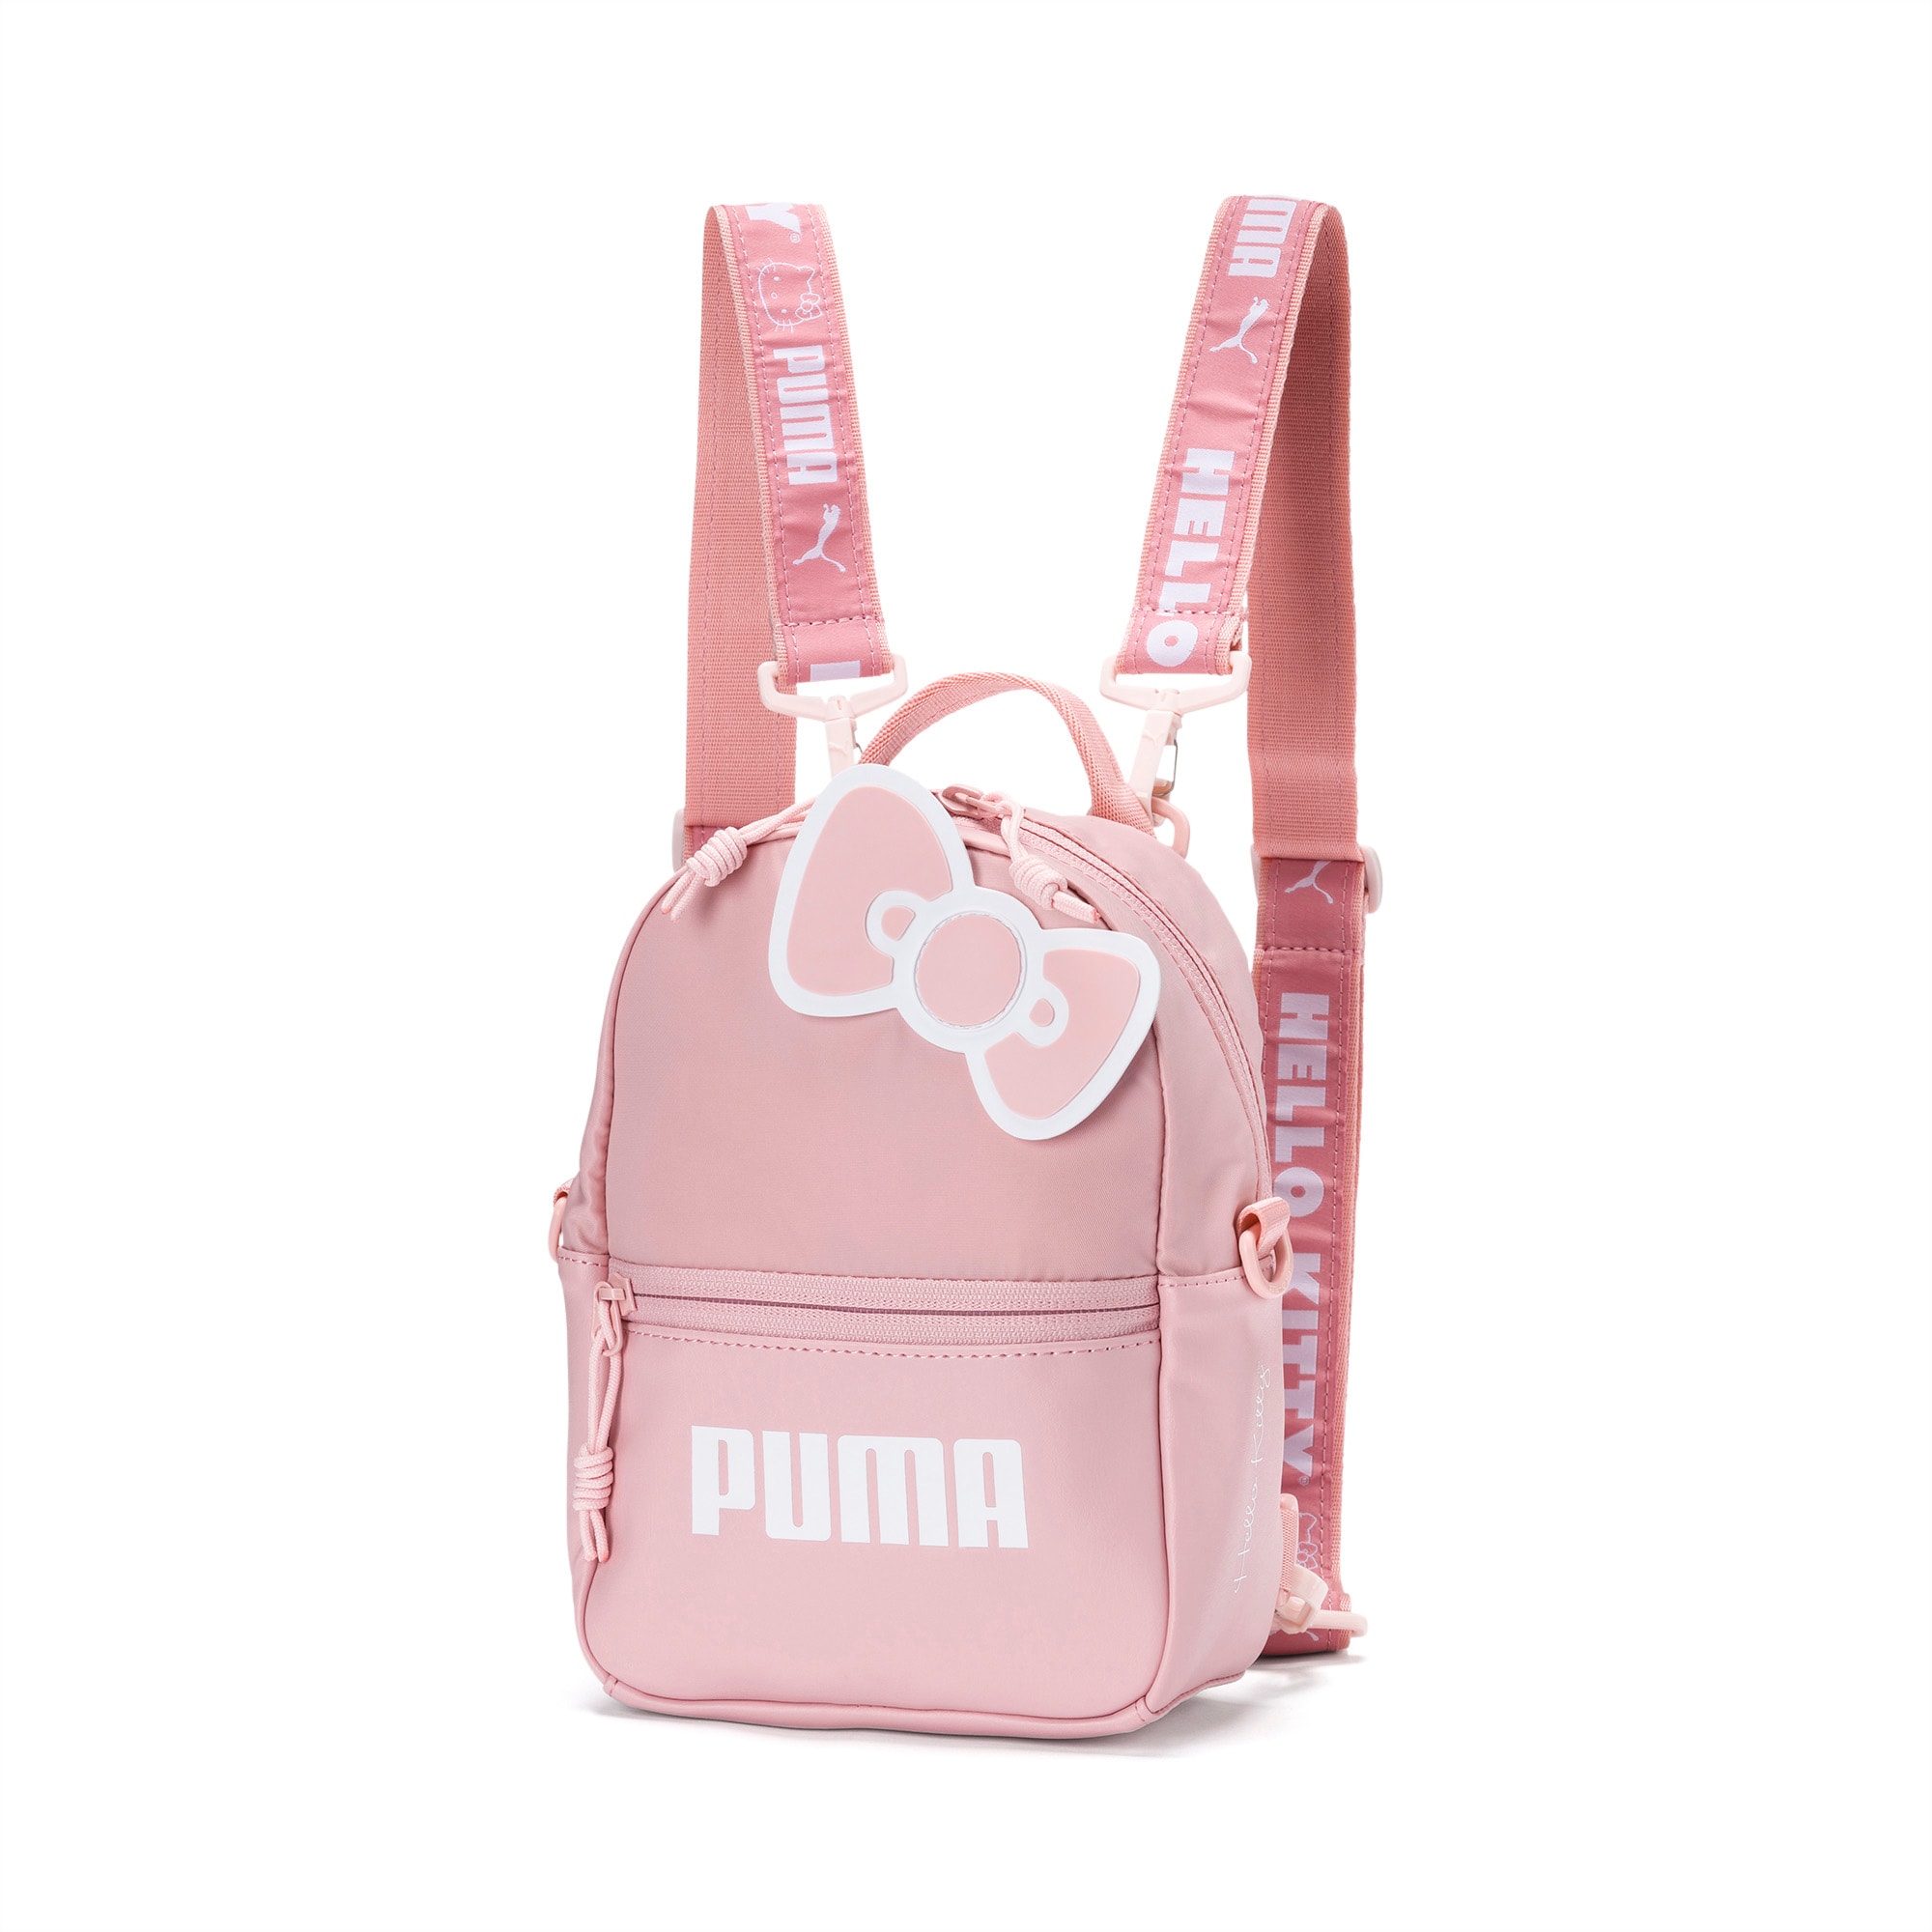 mochila puma backpack